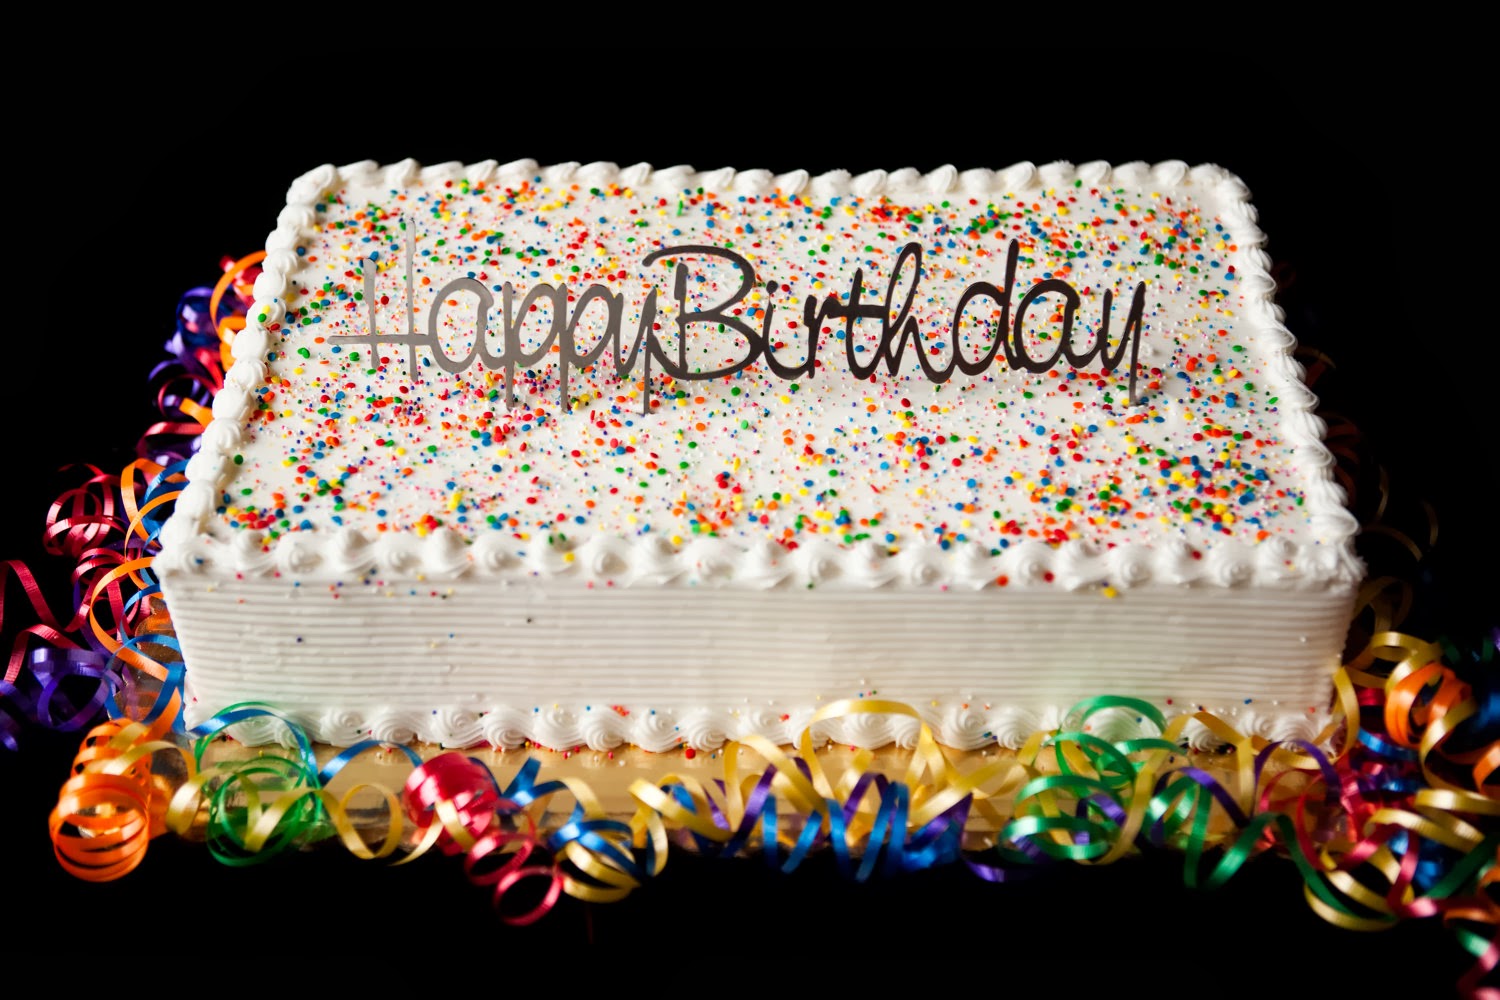 Happy+birthday+cake+hd+image..jpg